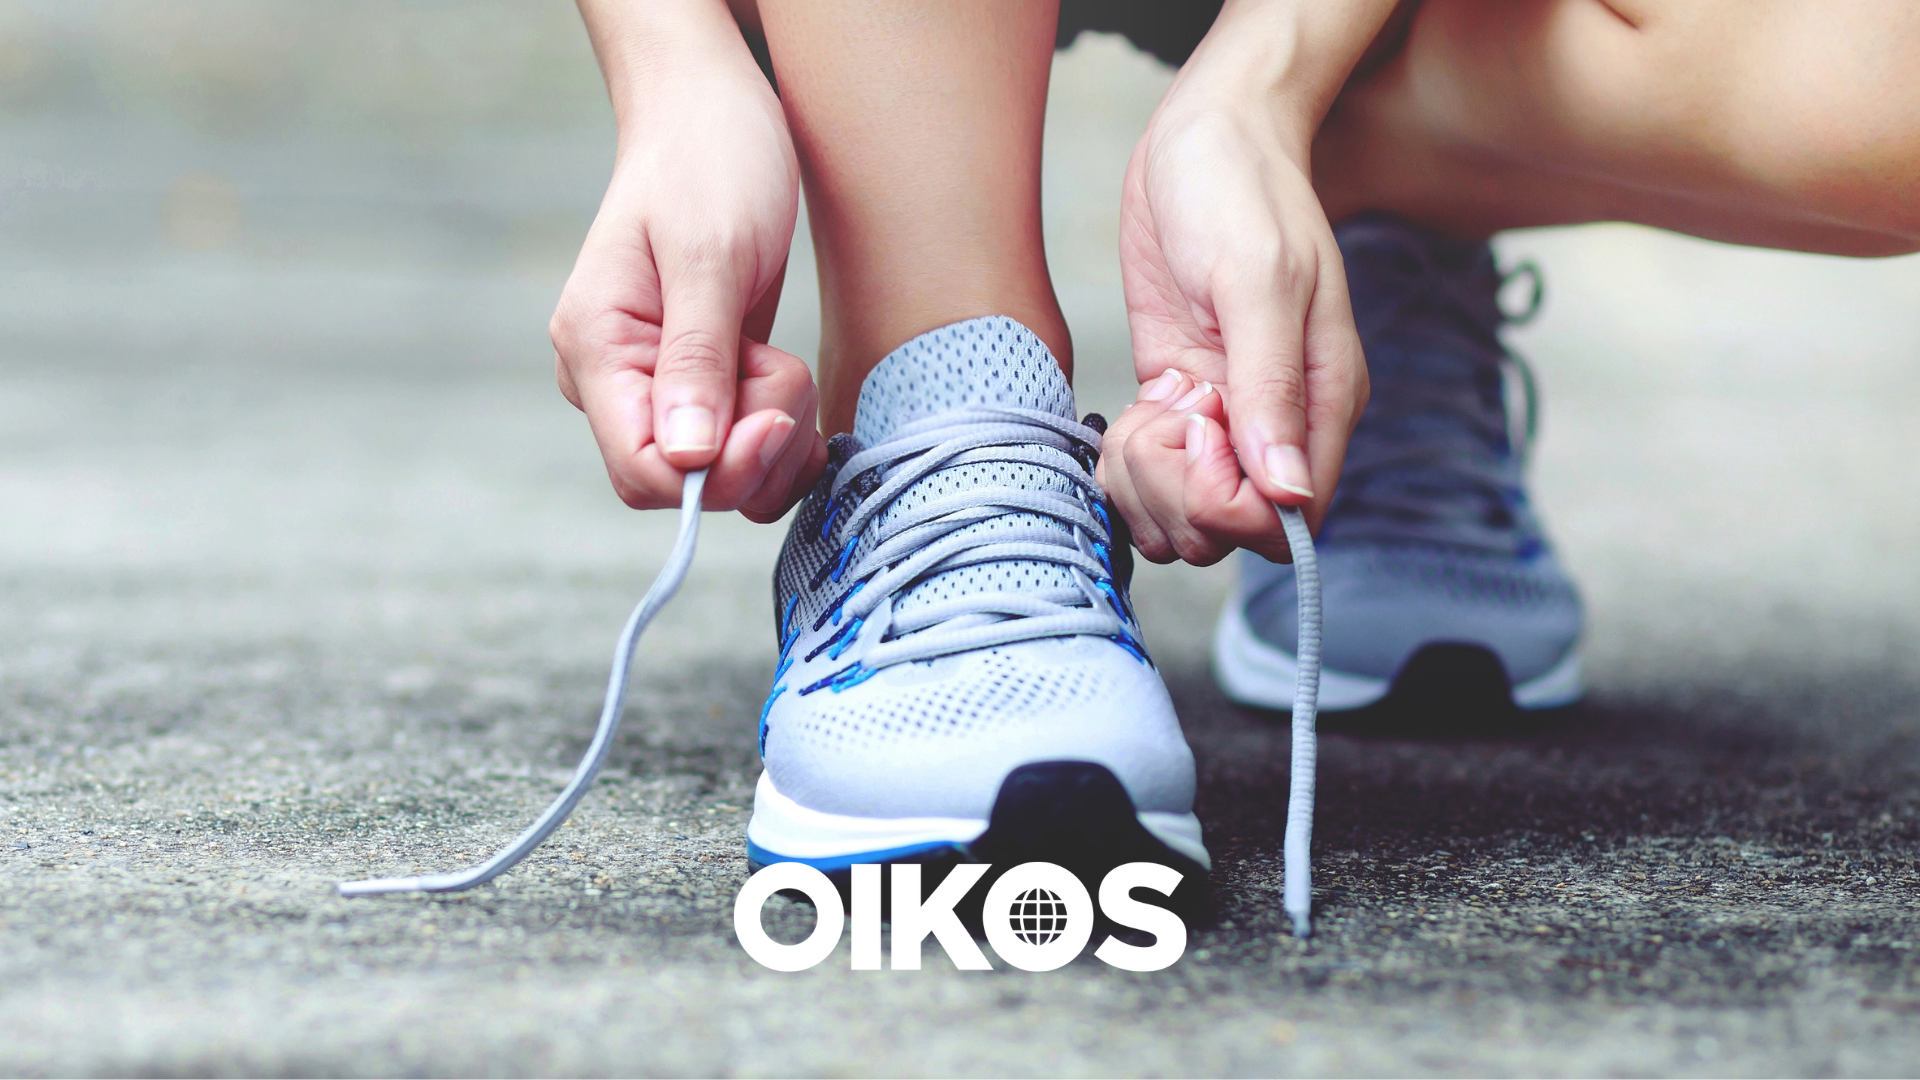 Oikos app walk (1920 x 1080 px